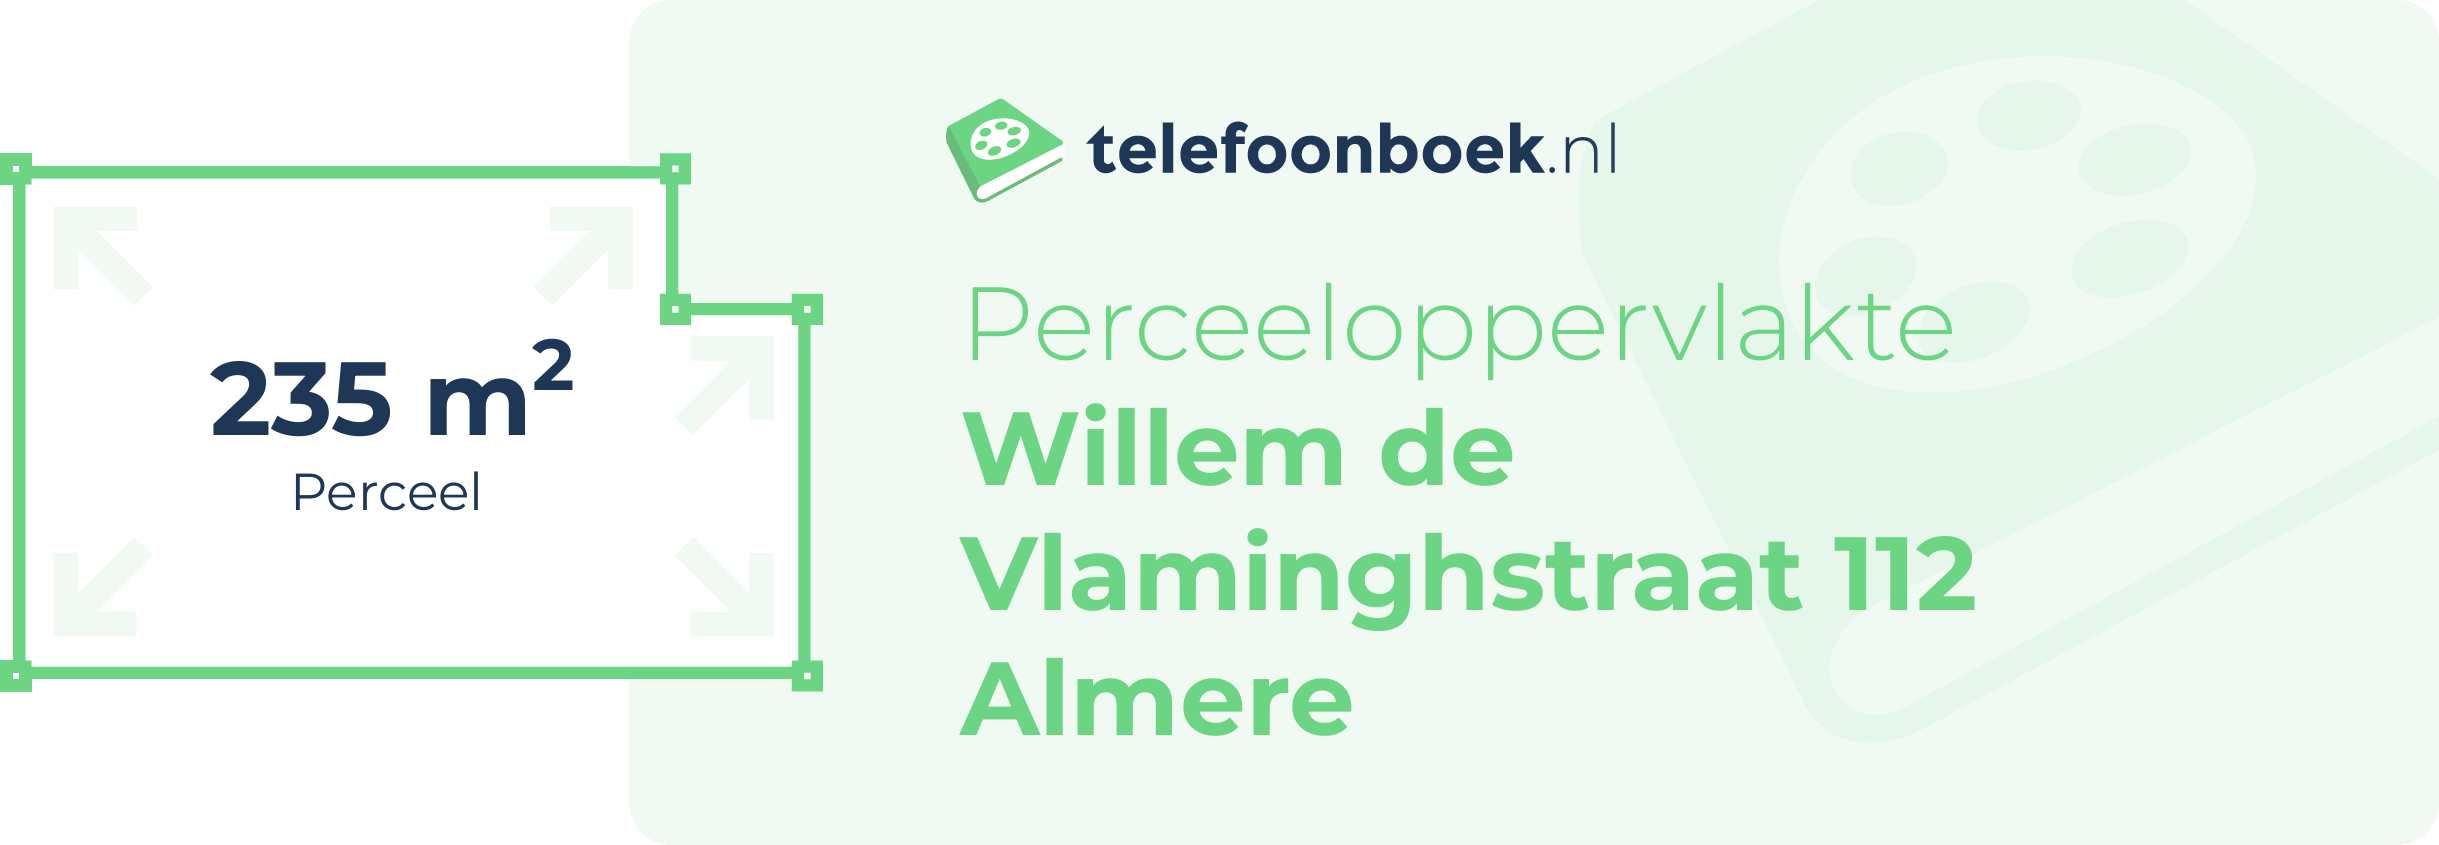 Perceeloppervlakte Willem De Vlaminghstraat 112 Almere